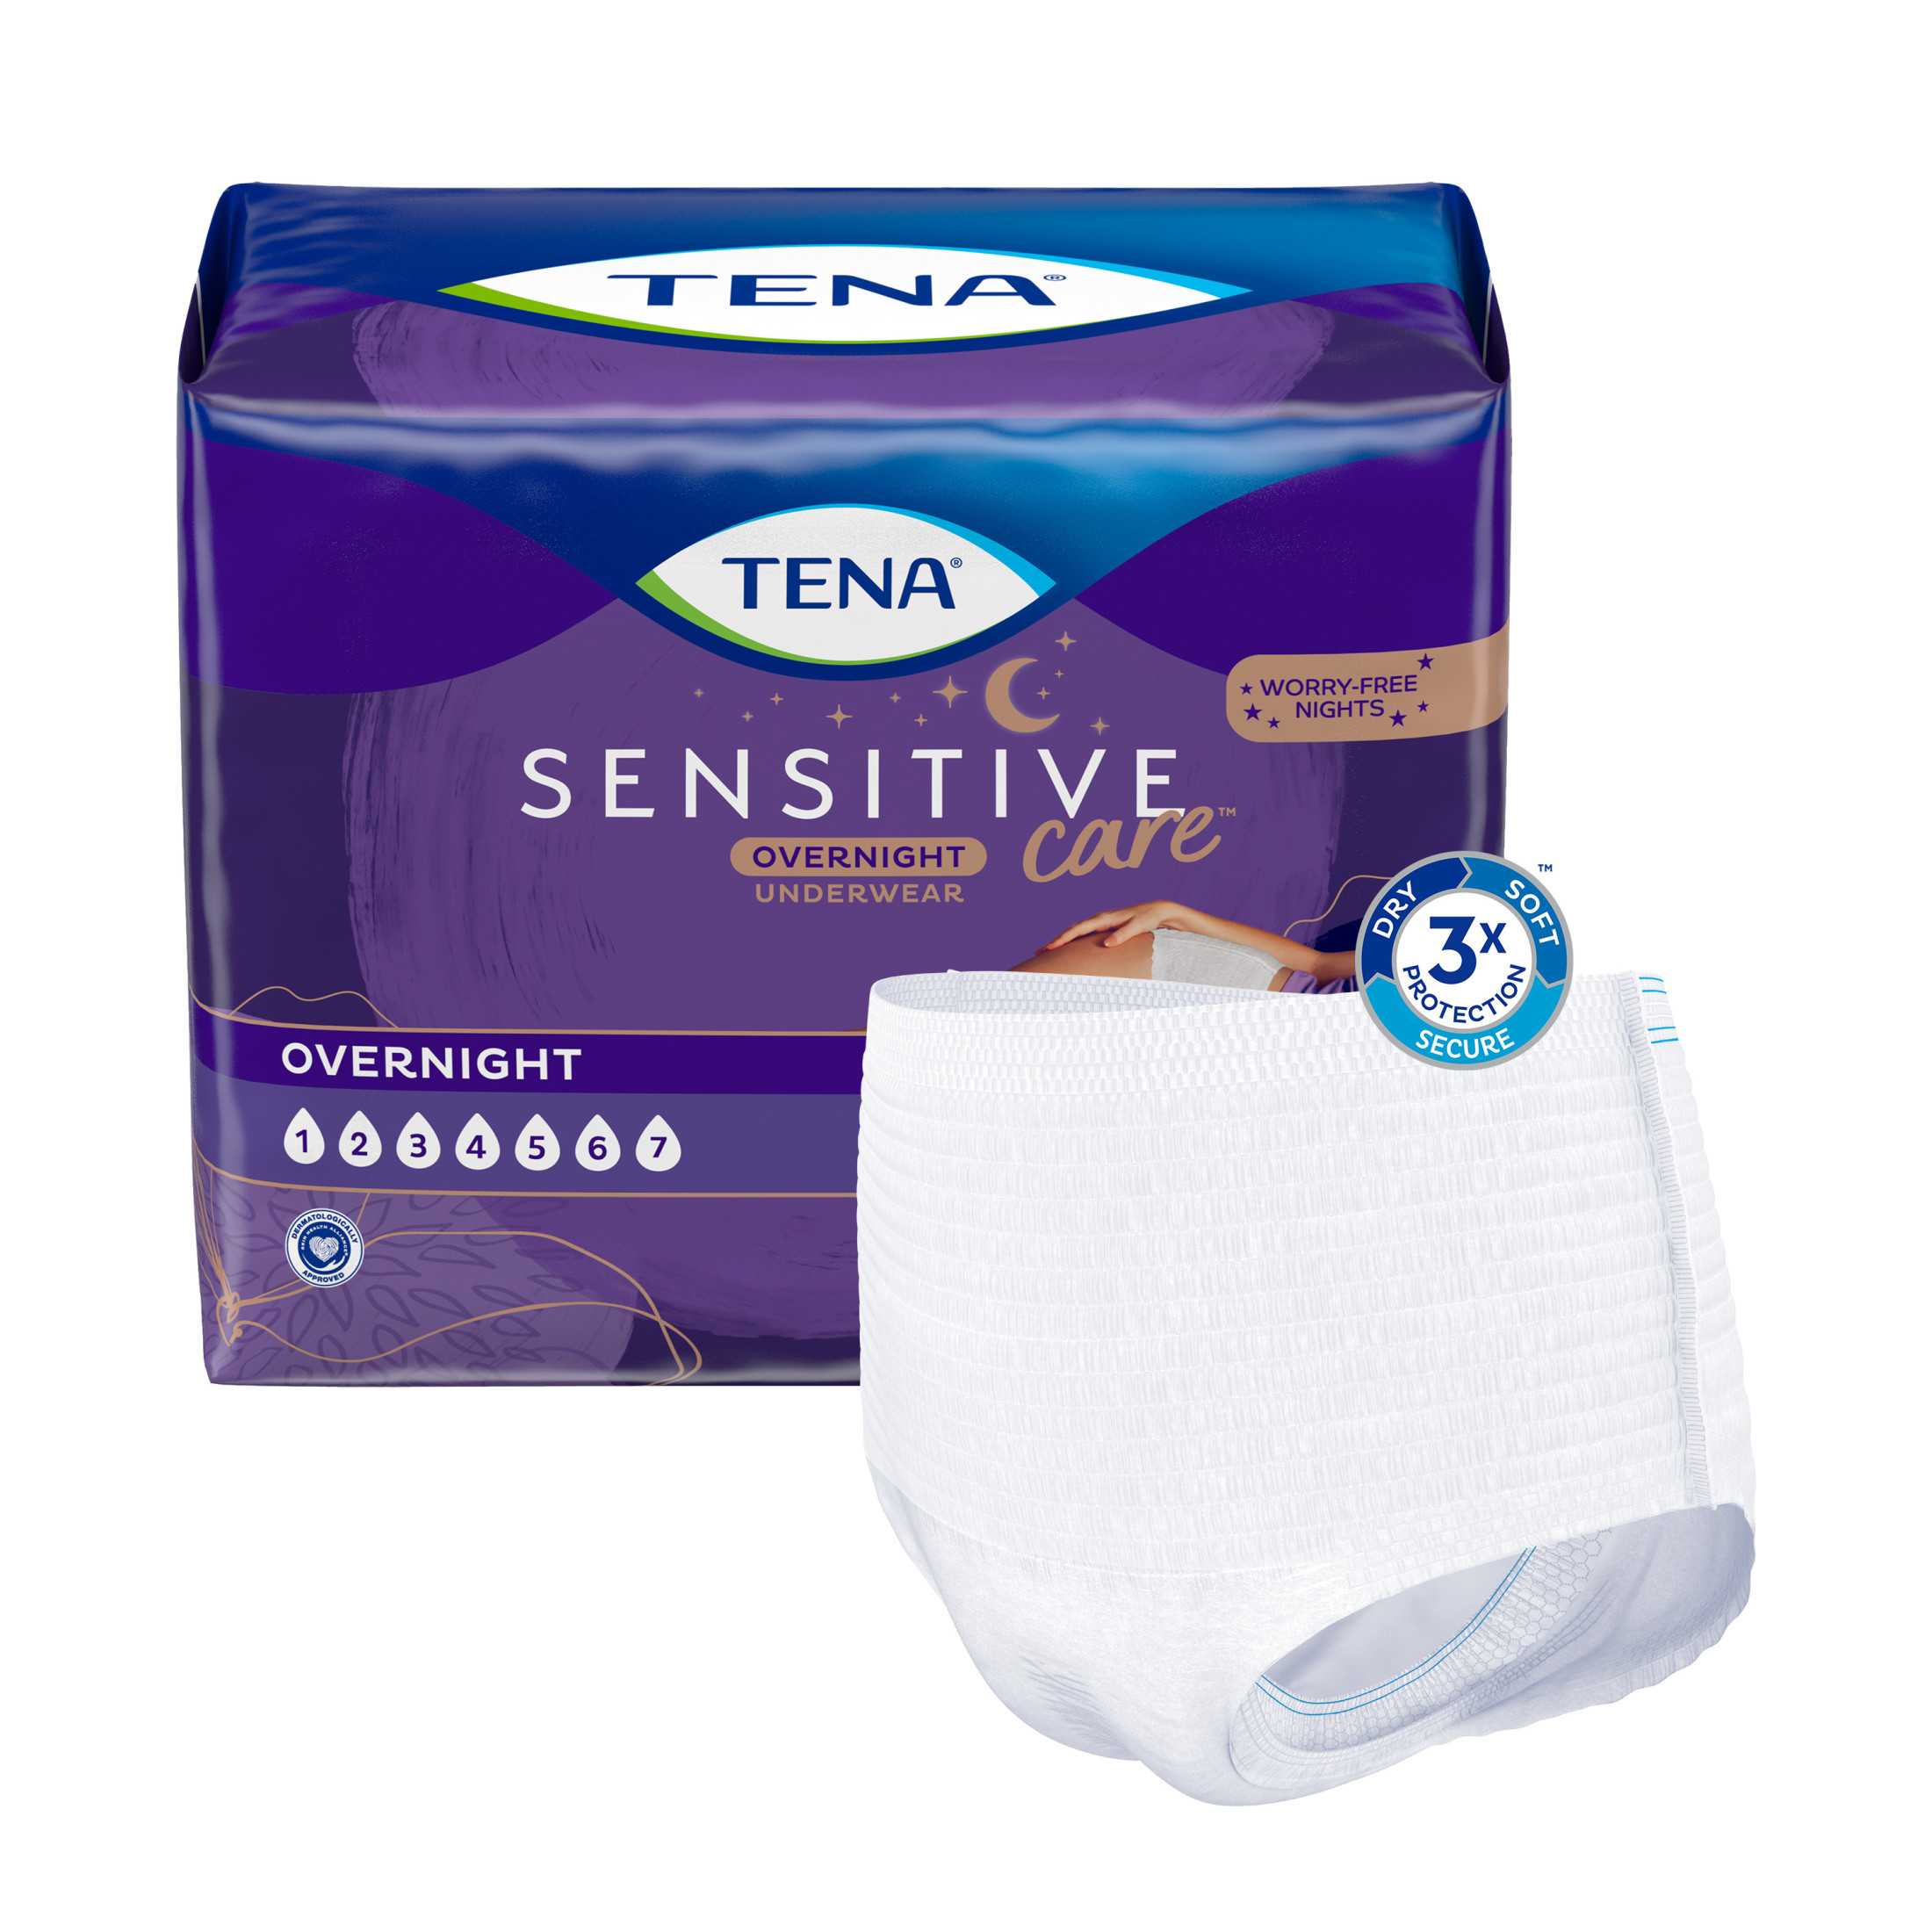 Tena Sensitive Care Overnight Underwear XLarge, 48 Ct - image 4 of 4